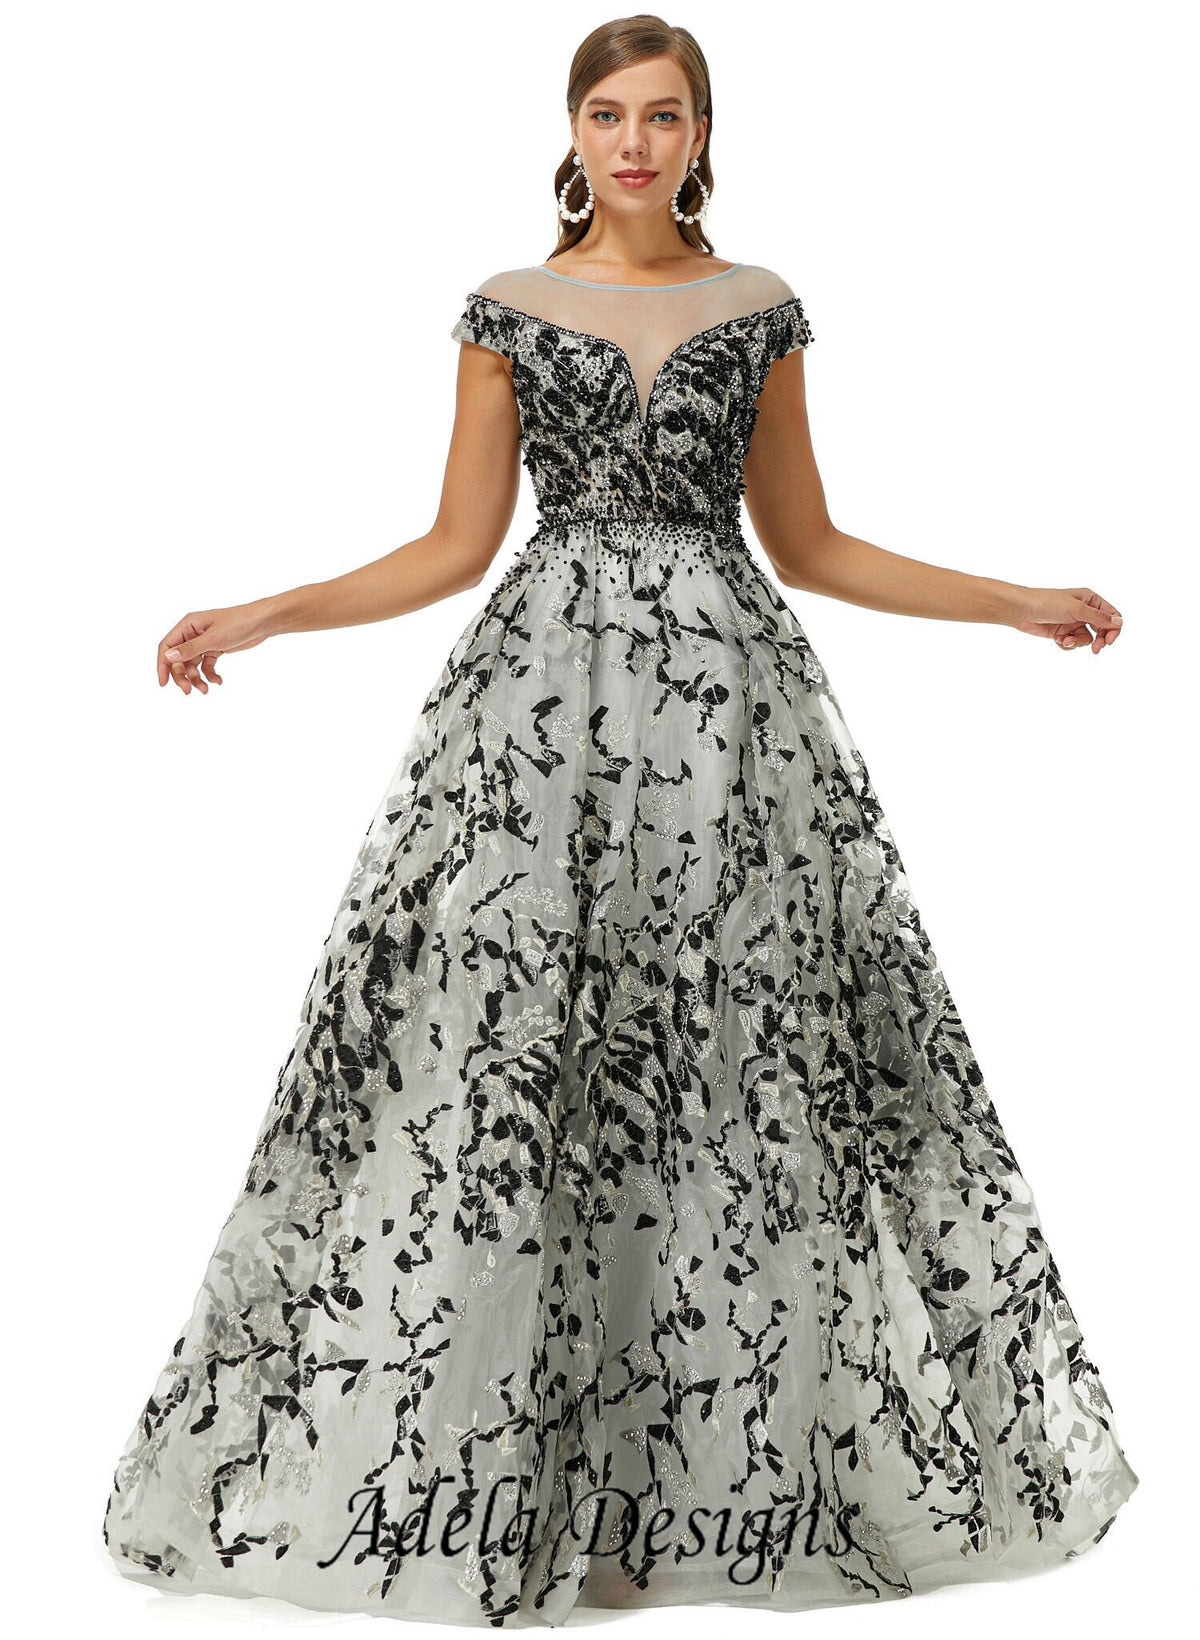 Unique Style Jewel Neckline Lace Long Illusion Off the Shoulder Cap Sleeve Aline Prom Dress Black and Silver Sparkle Plus Size